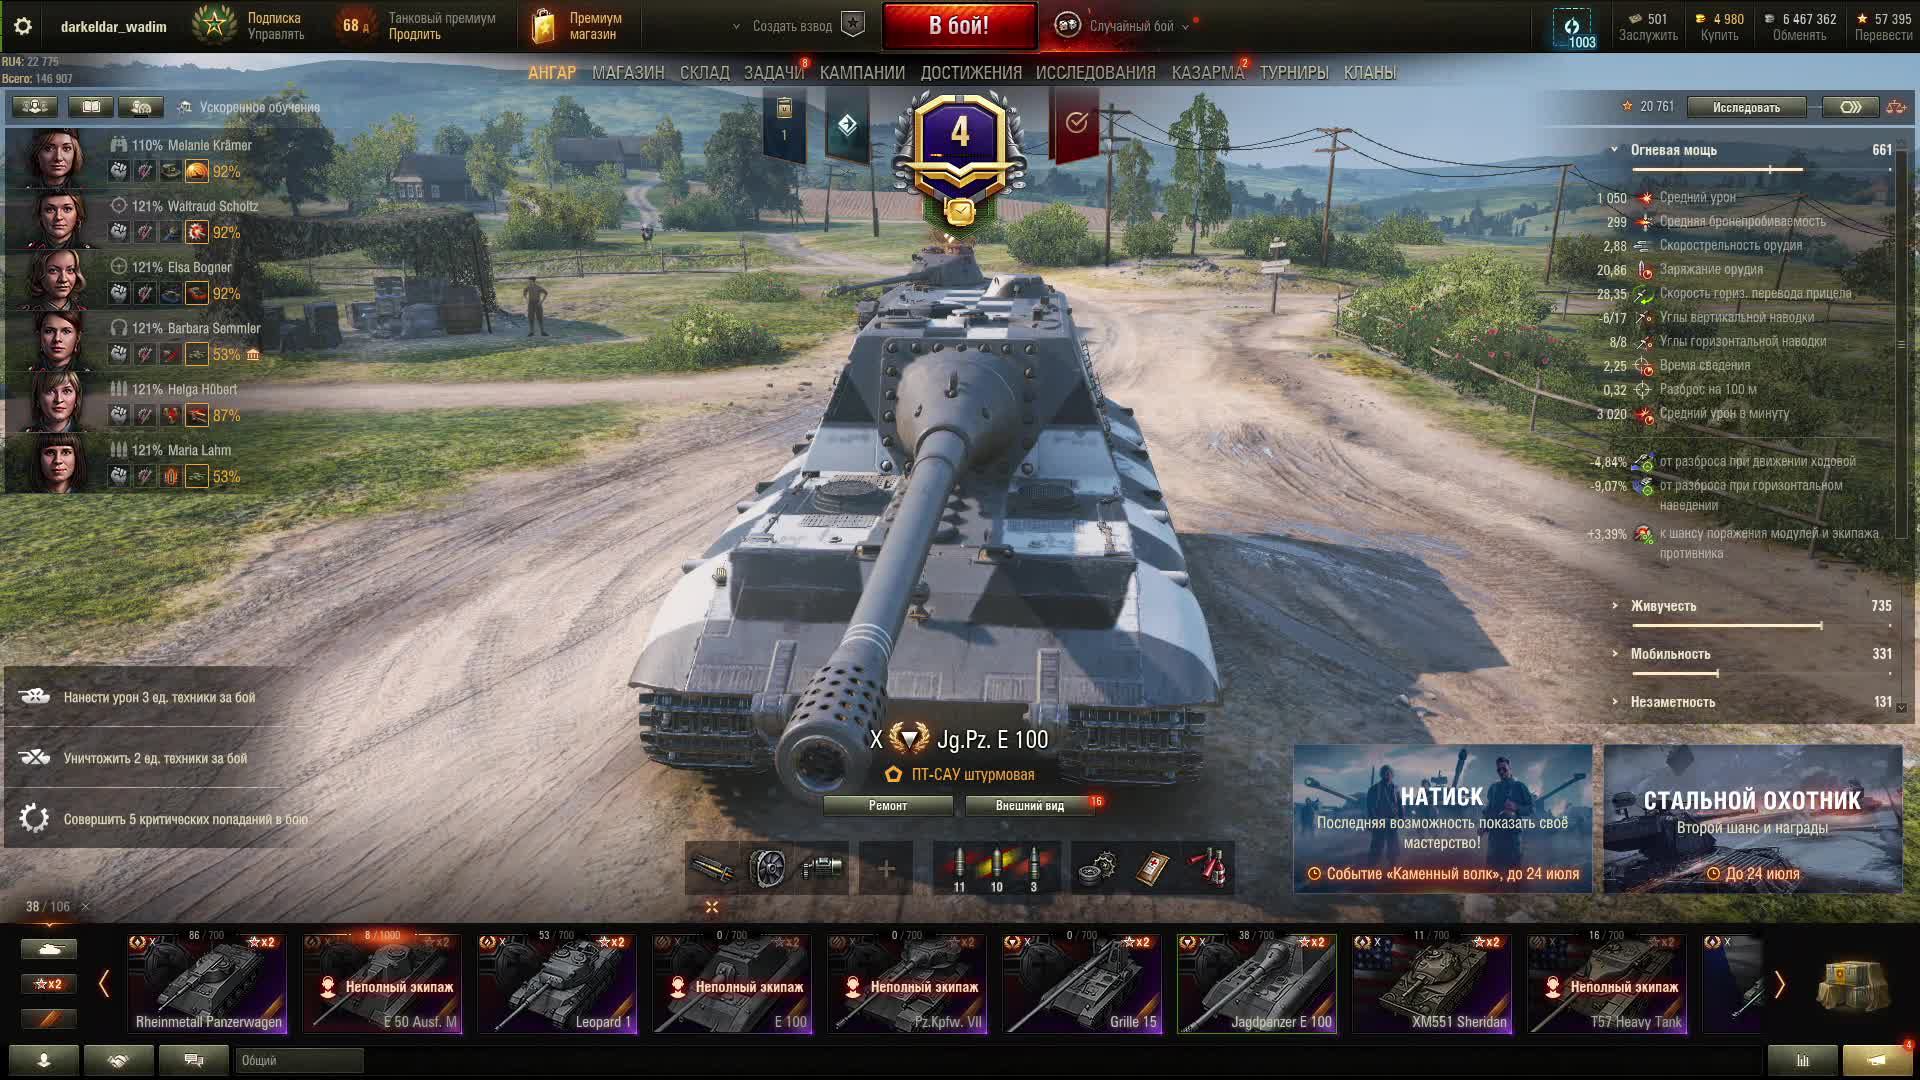 Мир танков (World of tanks) - на больших калибрах (caliban, FV215B183, Jagdpanzer E 100)